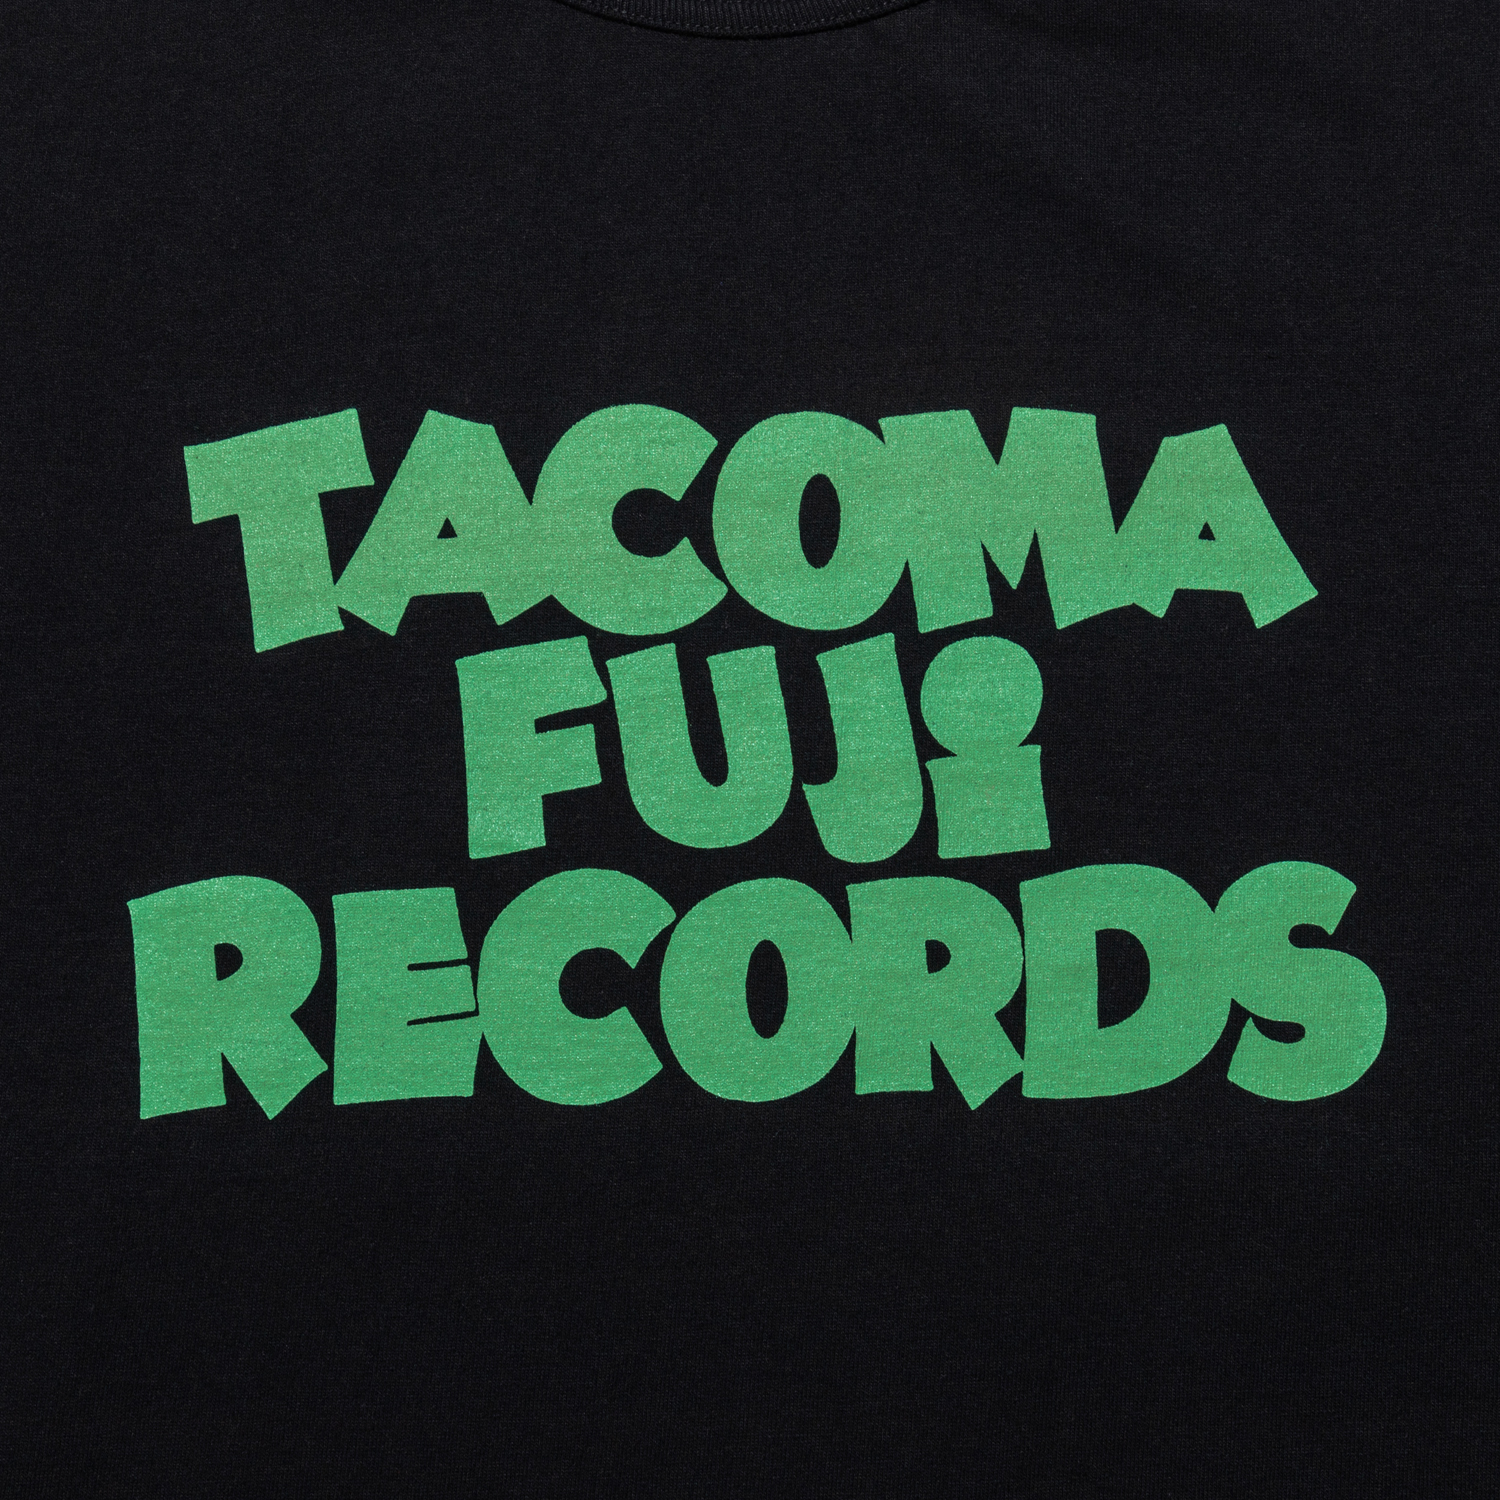 TACOMA FUJI RECORDS (JURASSIC edition) designed by Jerry UKAI